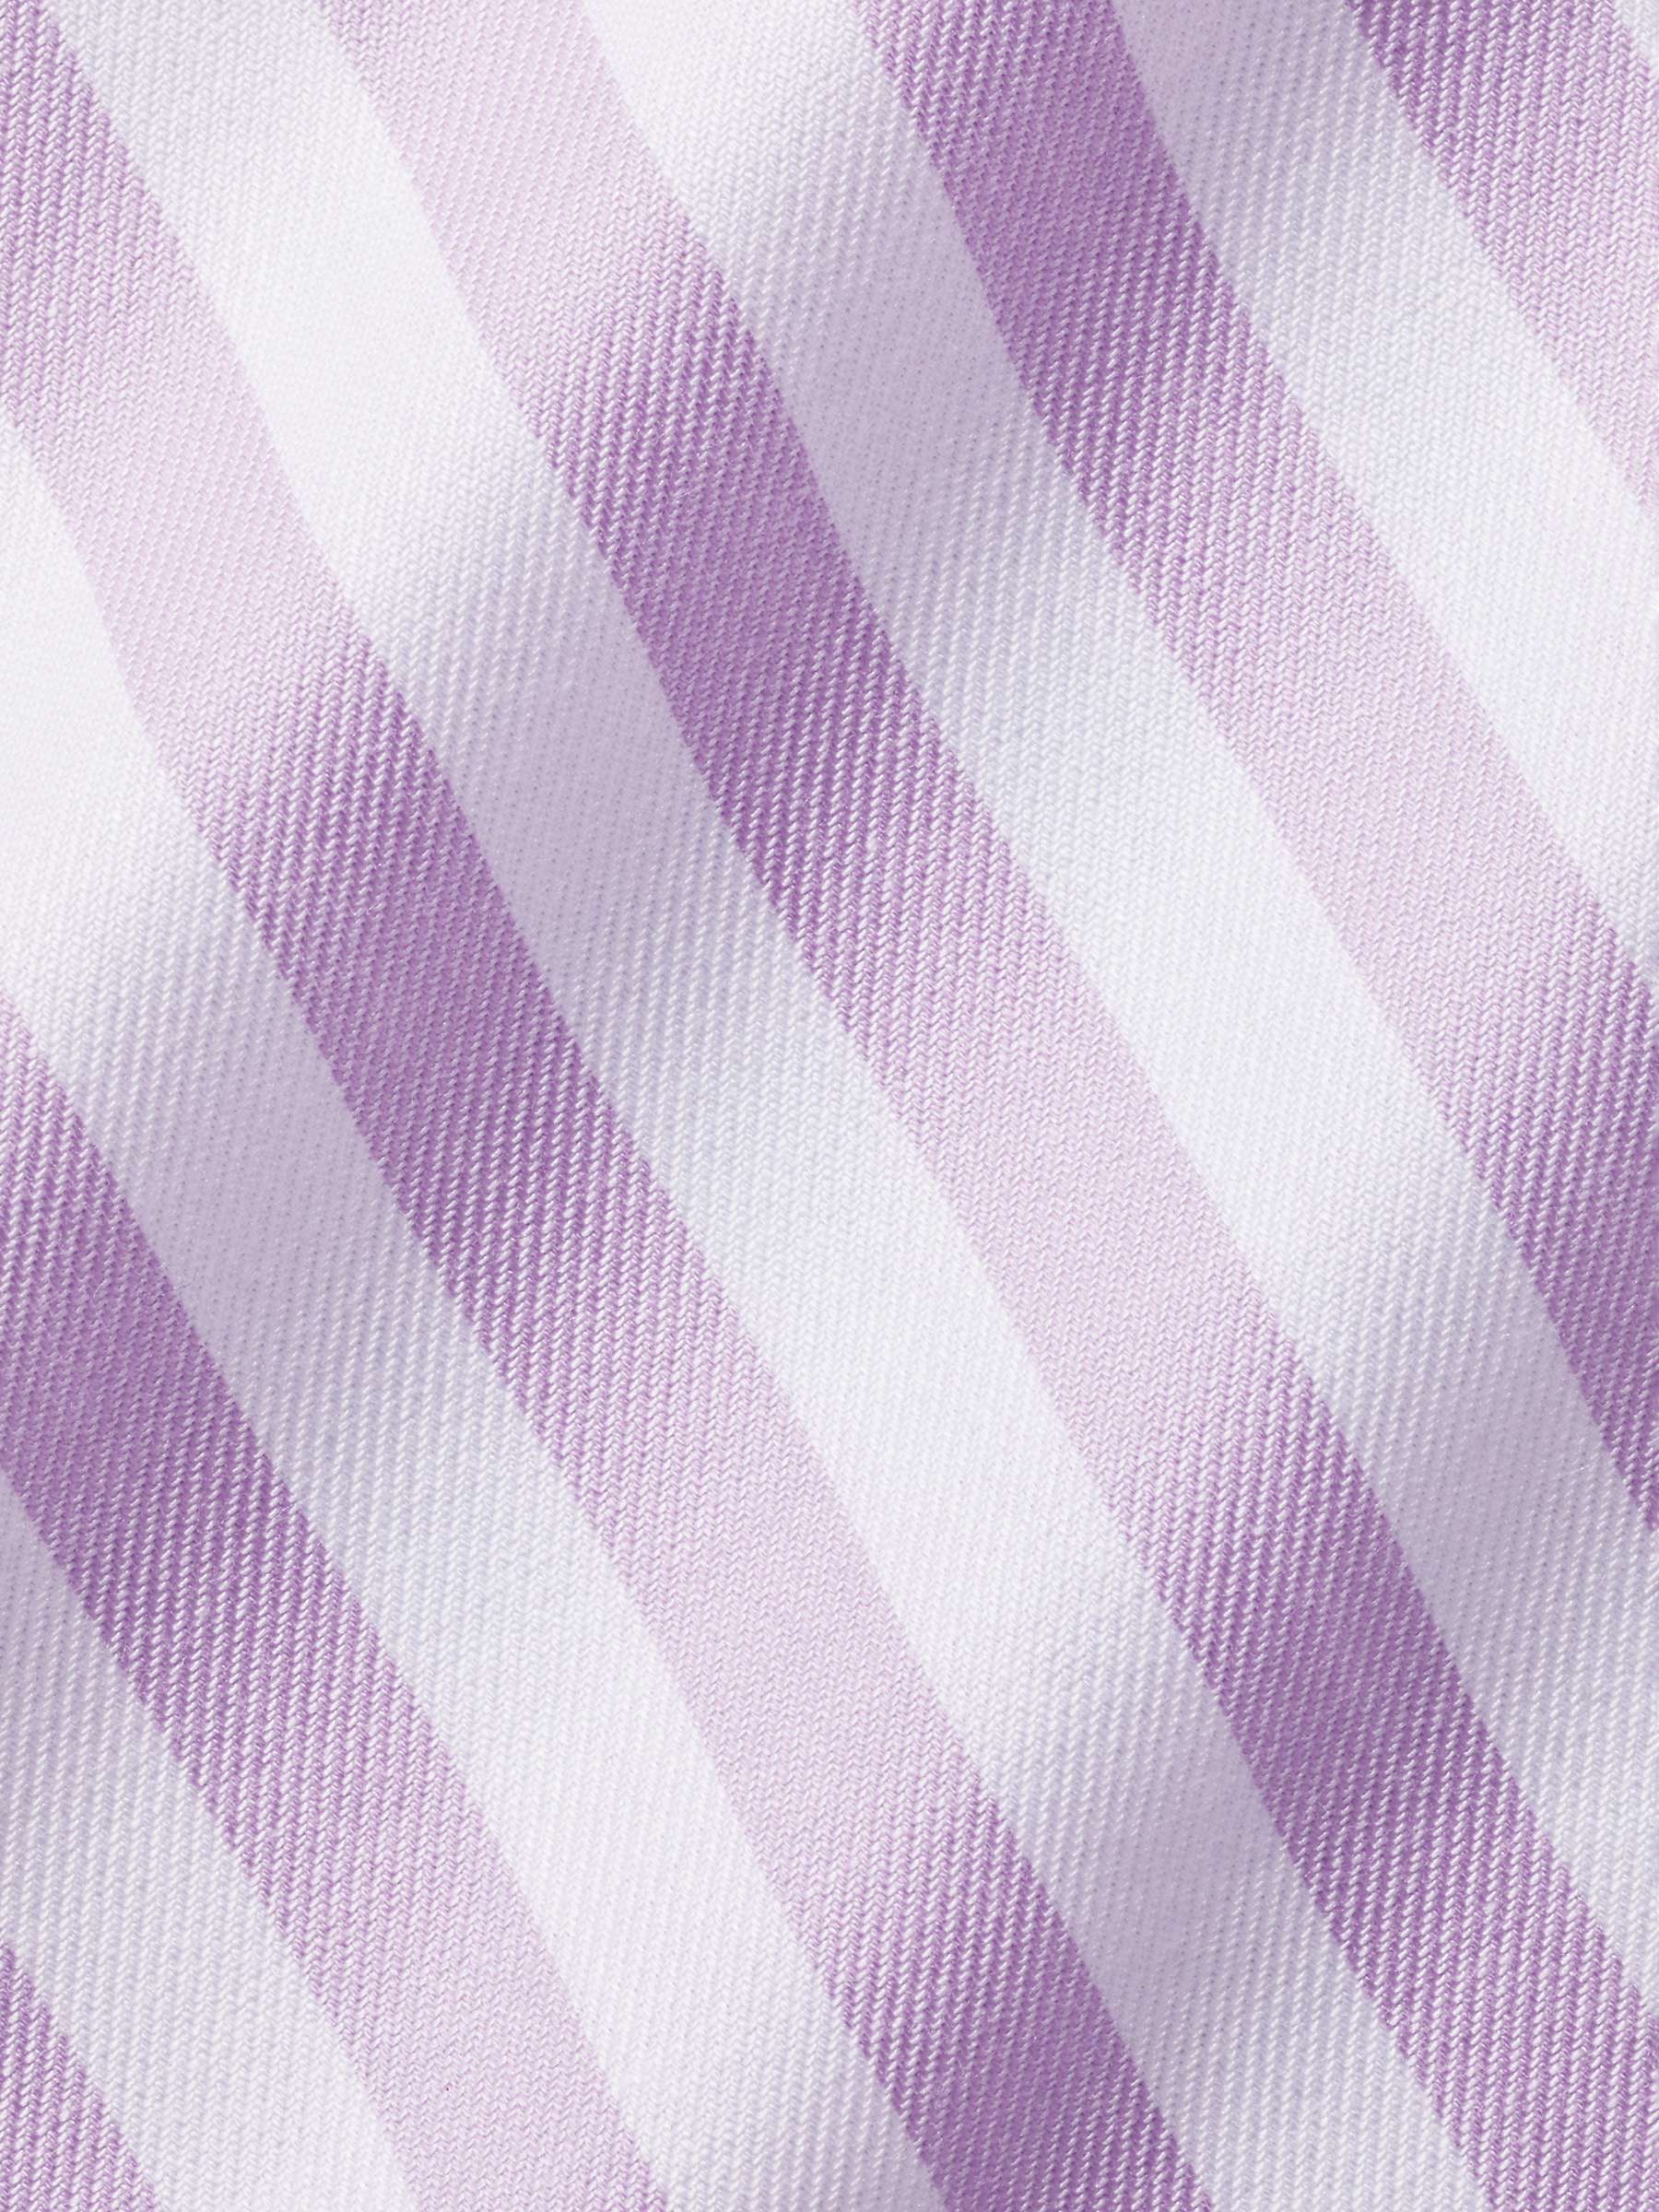 Buy Charles Tyrwhitt Non-Iron Long Sleeve Wide Stripe Shirt Online at johnlewis.com